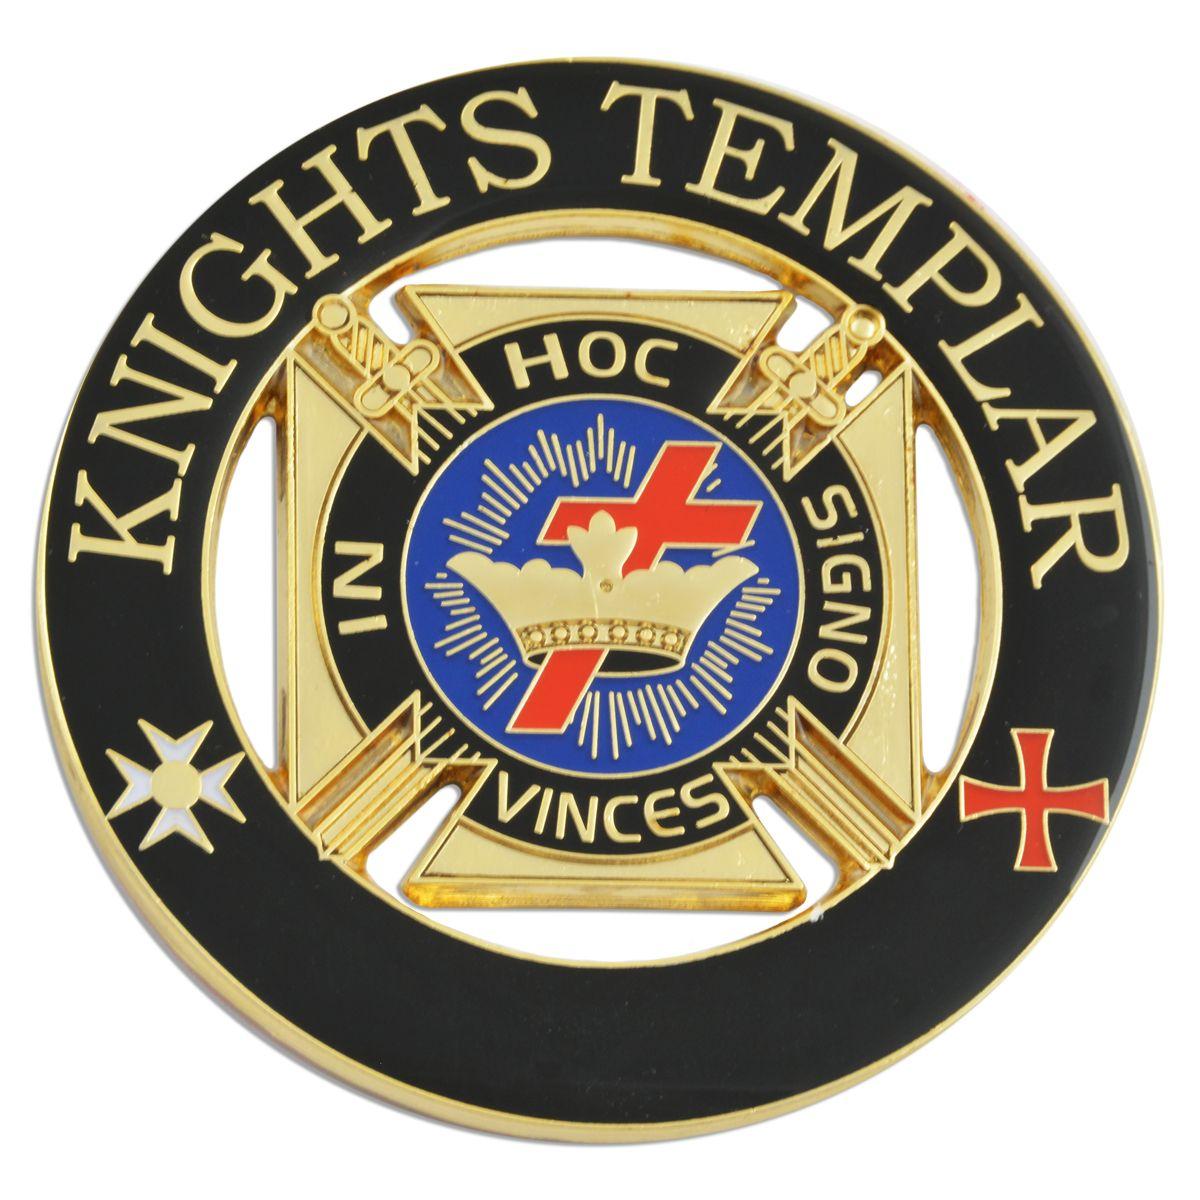 Knights Templar Logo - Knights Templar Cross & Crown Black & Gold Round Car Auto Emblem